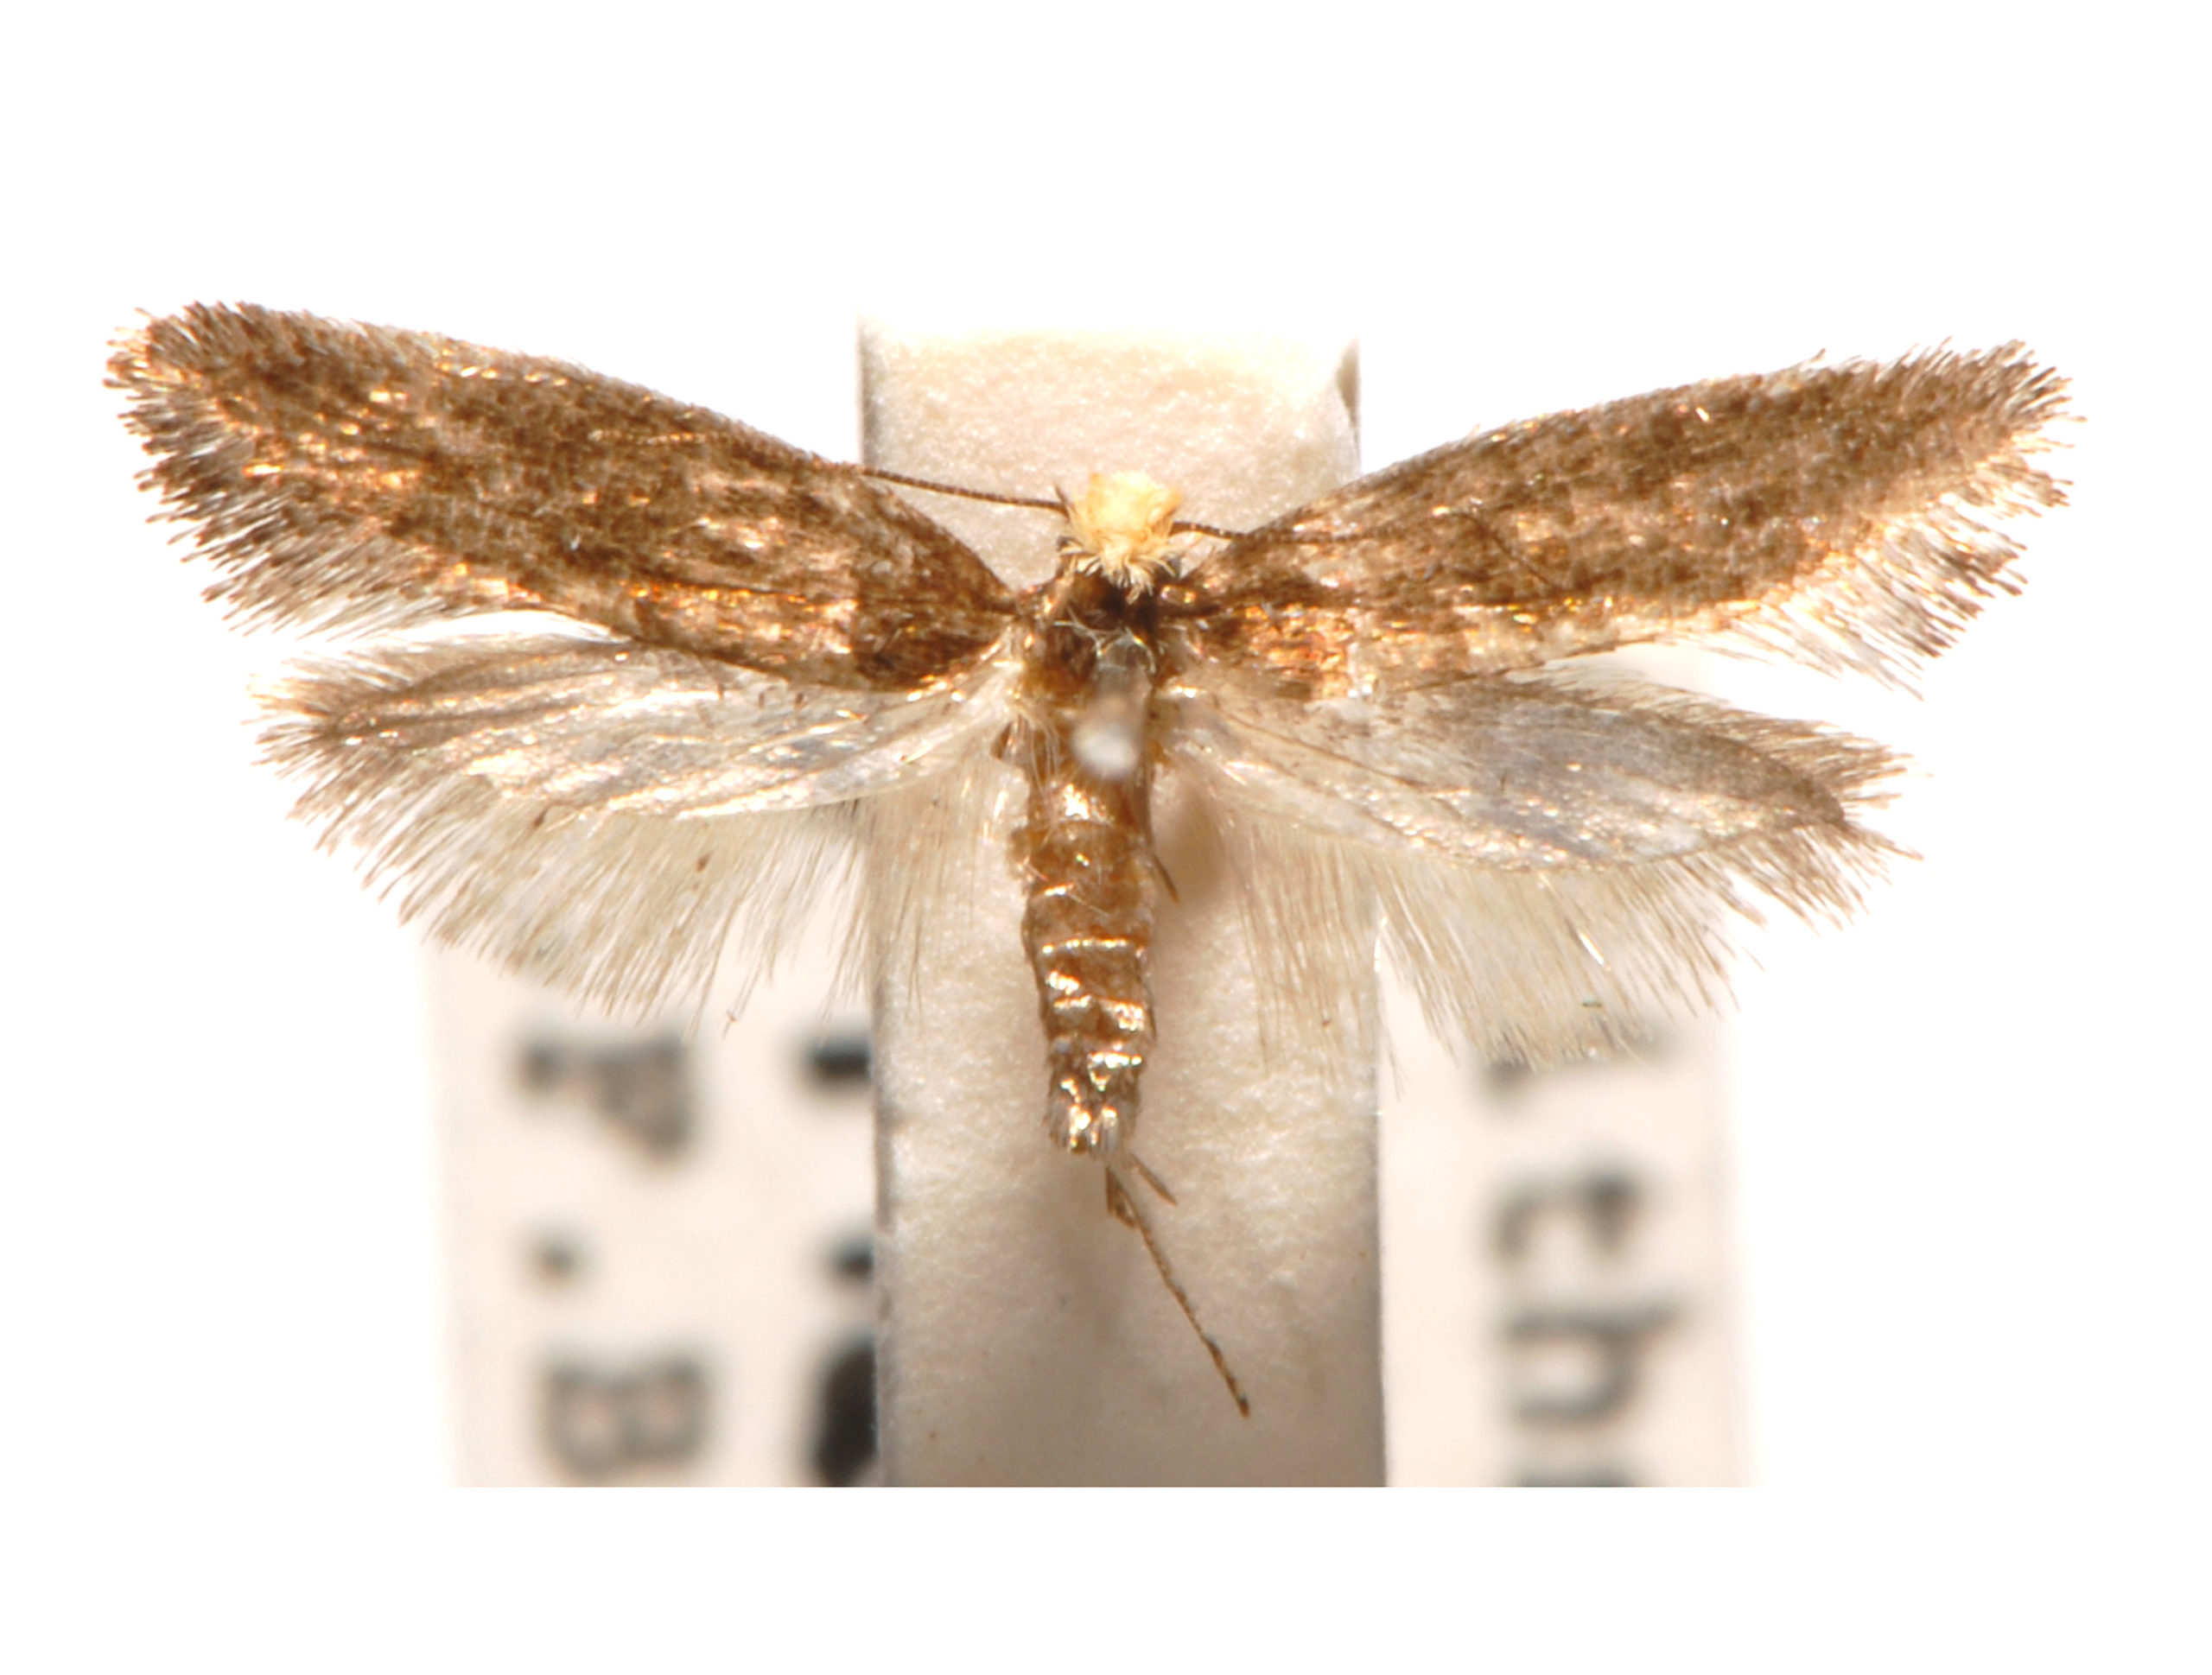 Ptyssoptera melitocoma